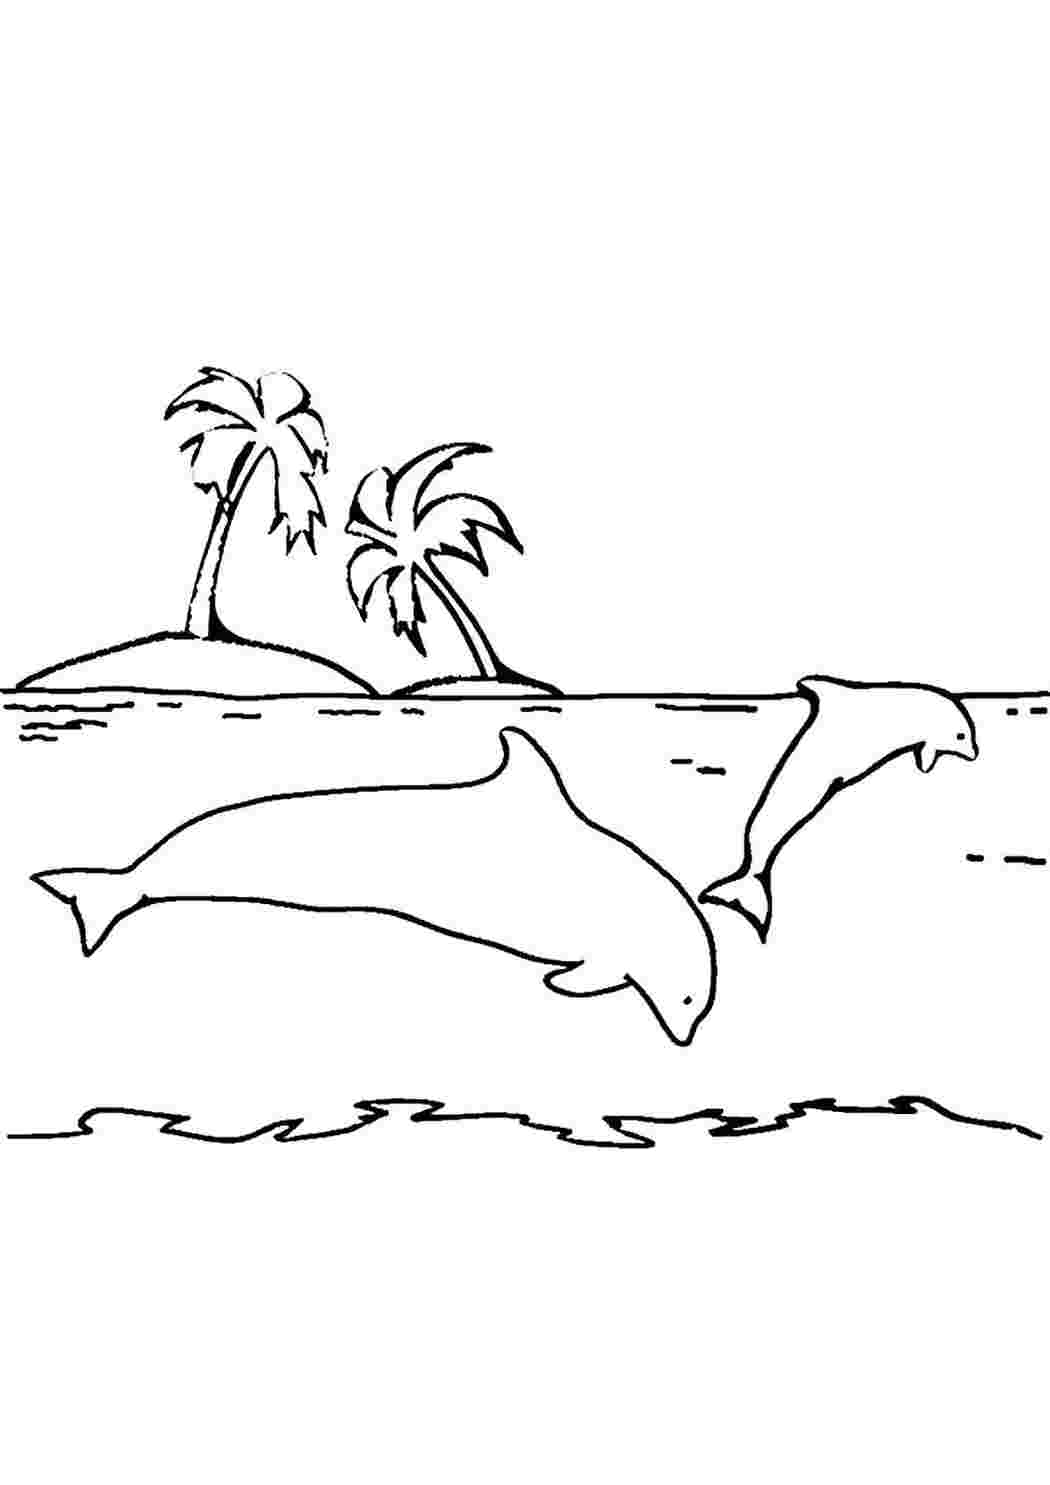 Рисование онлайн: Чудо остров.. Нарисовал(а) Гость